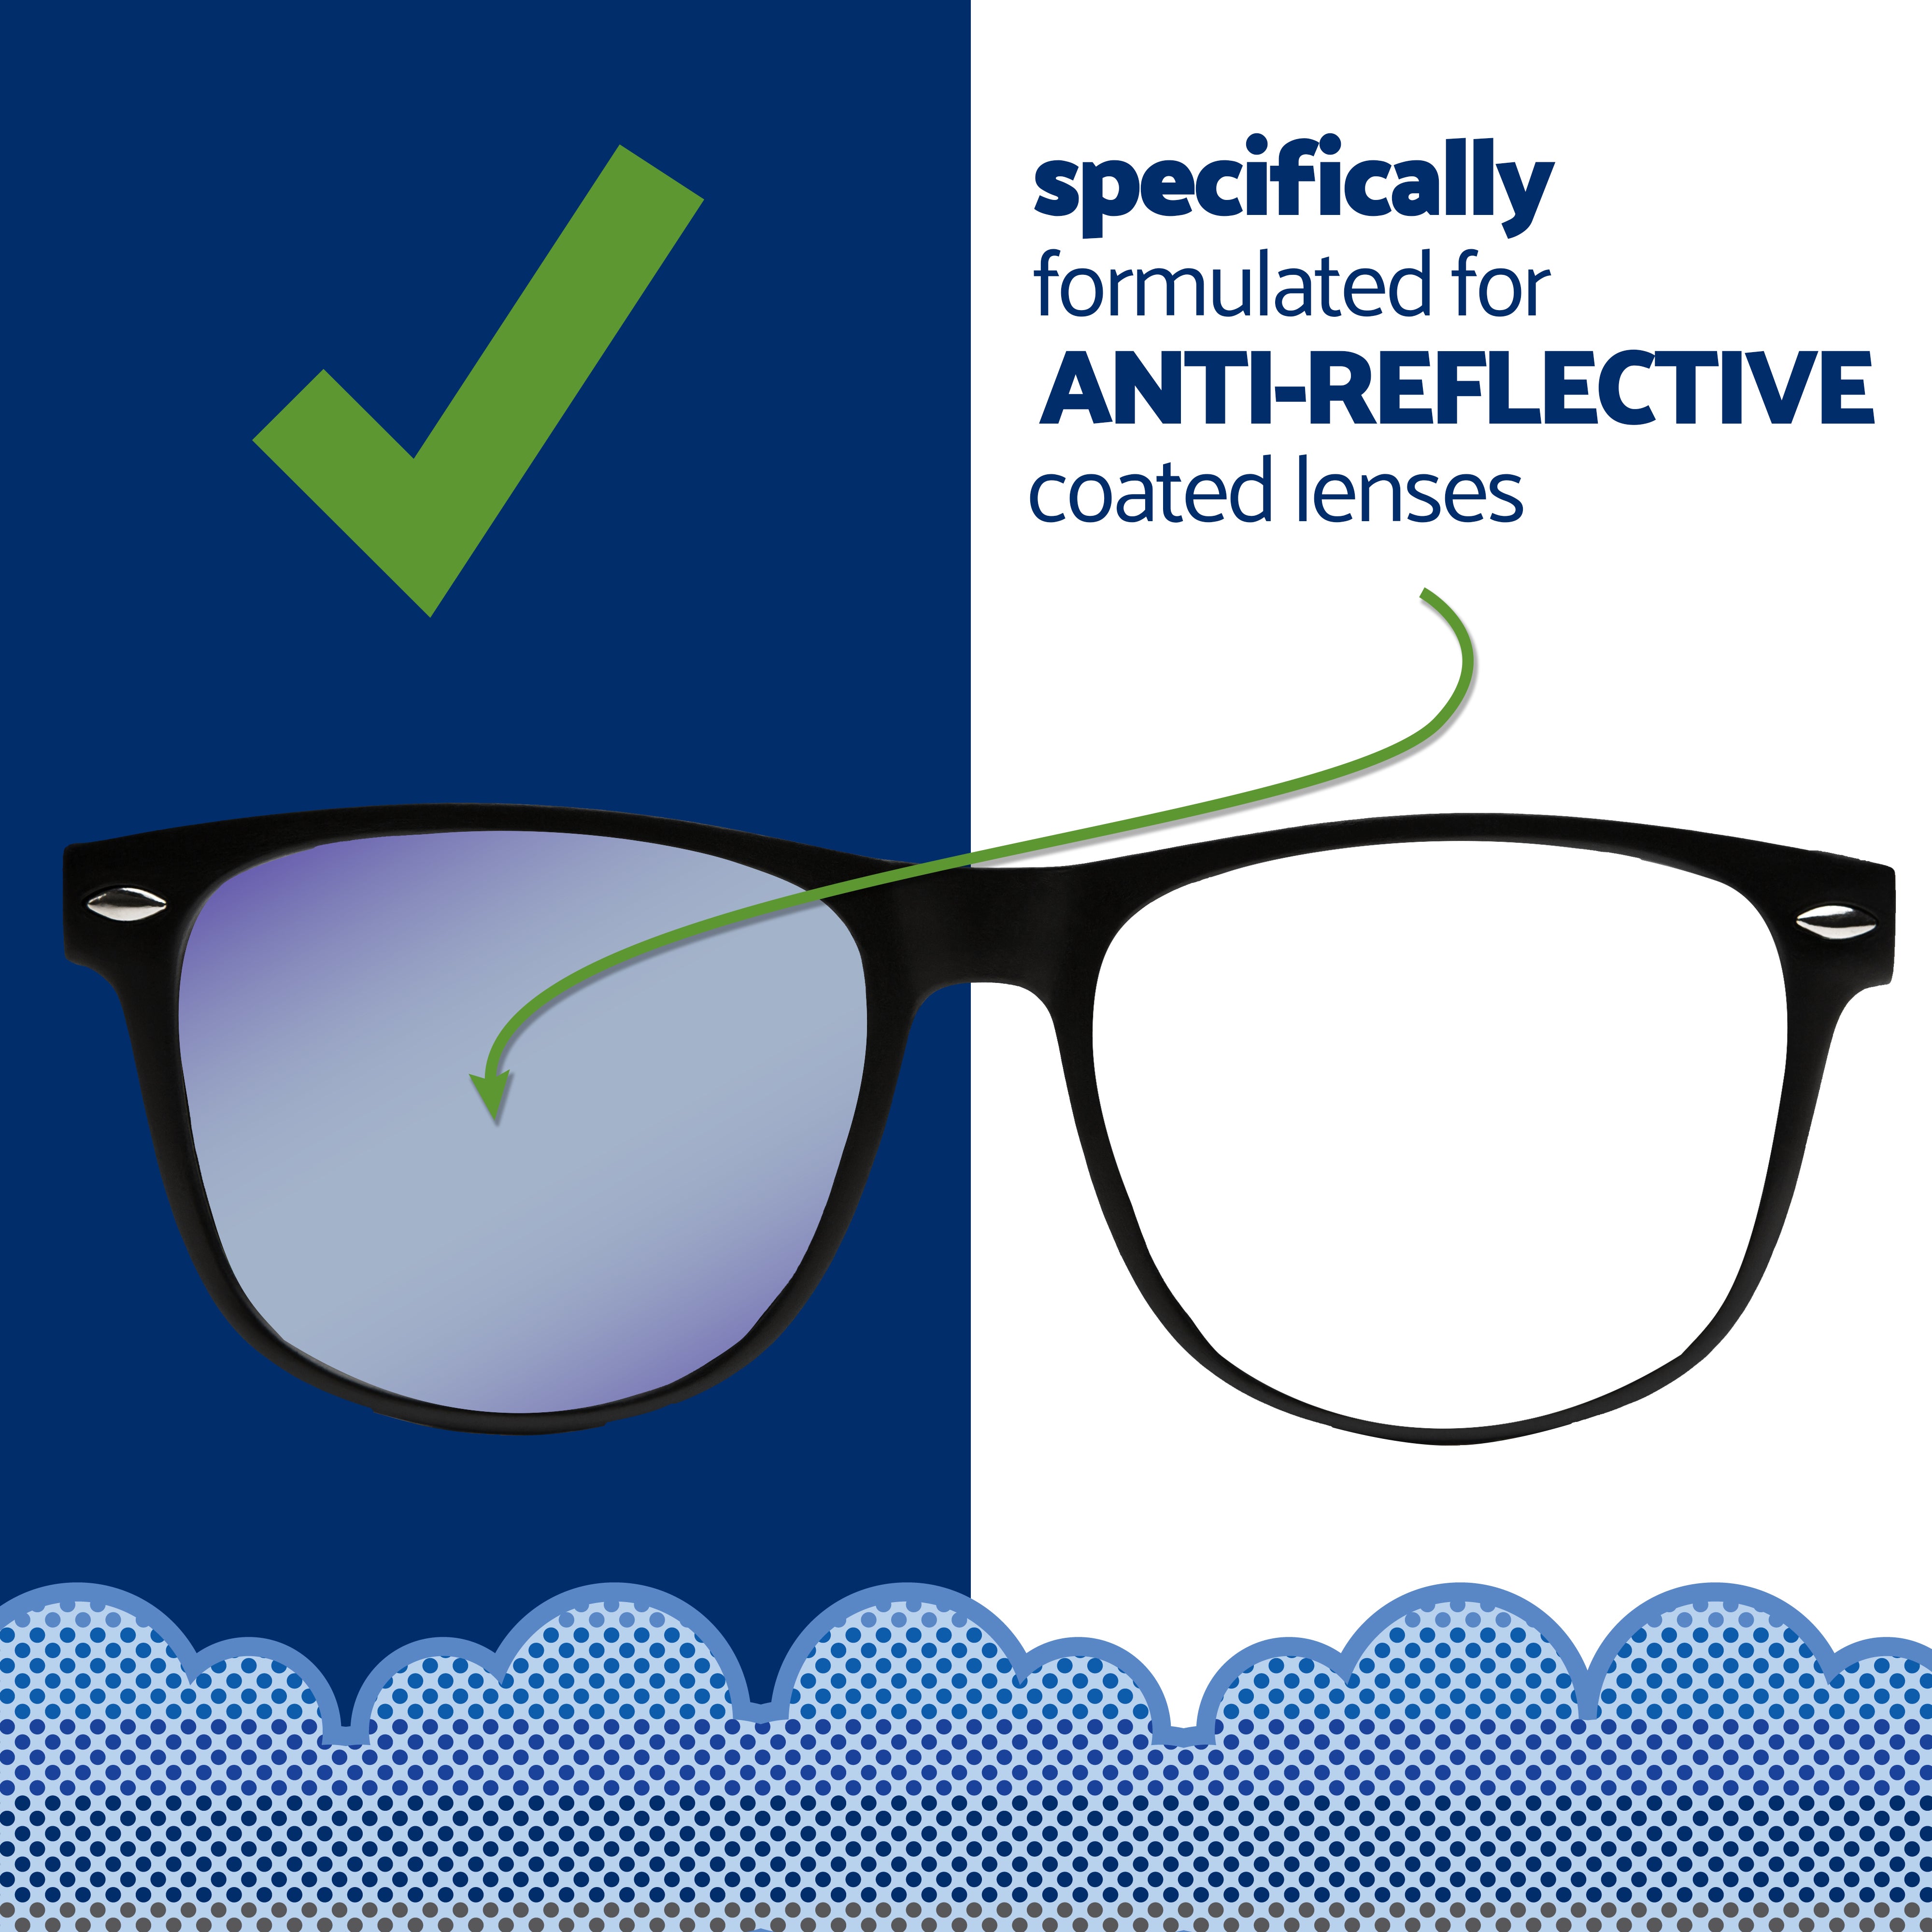 Anti-Fog Treatment for Anti-Reflective Lenses